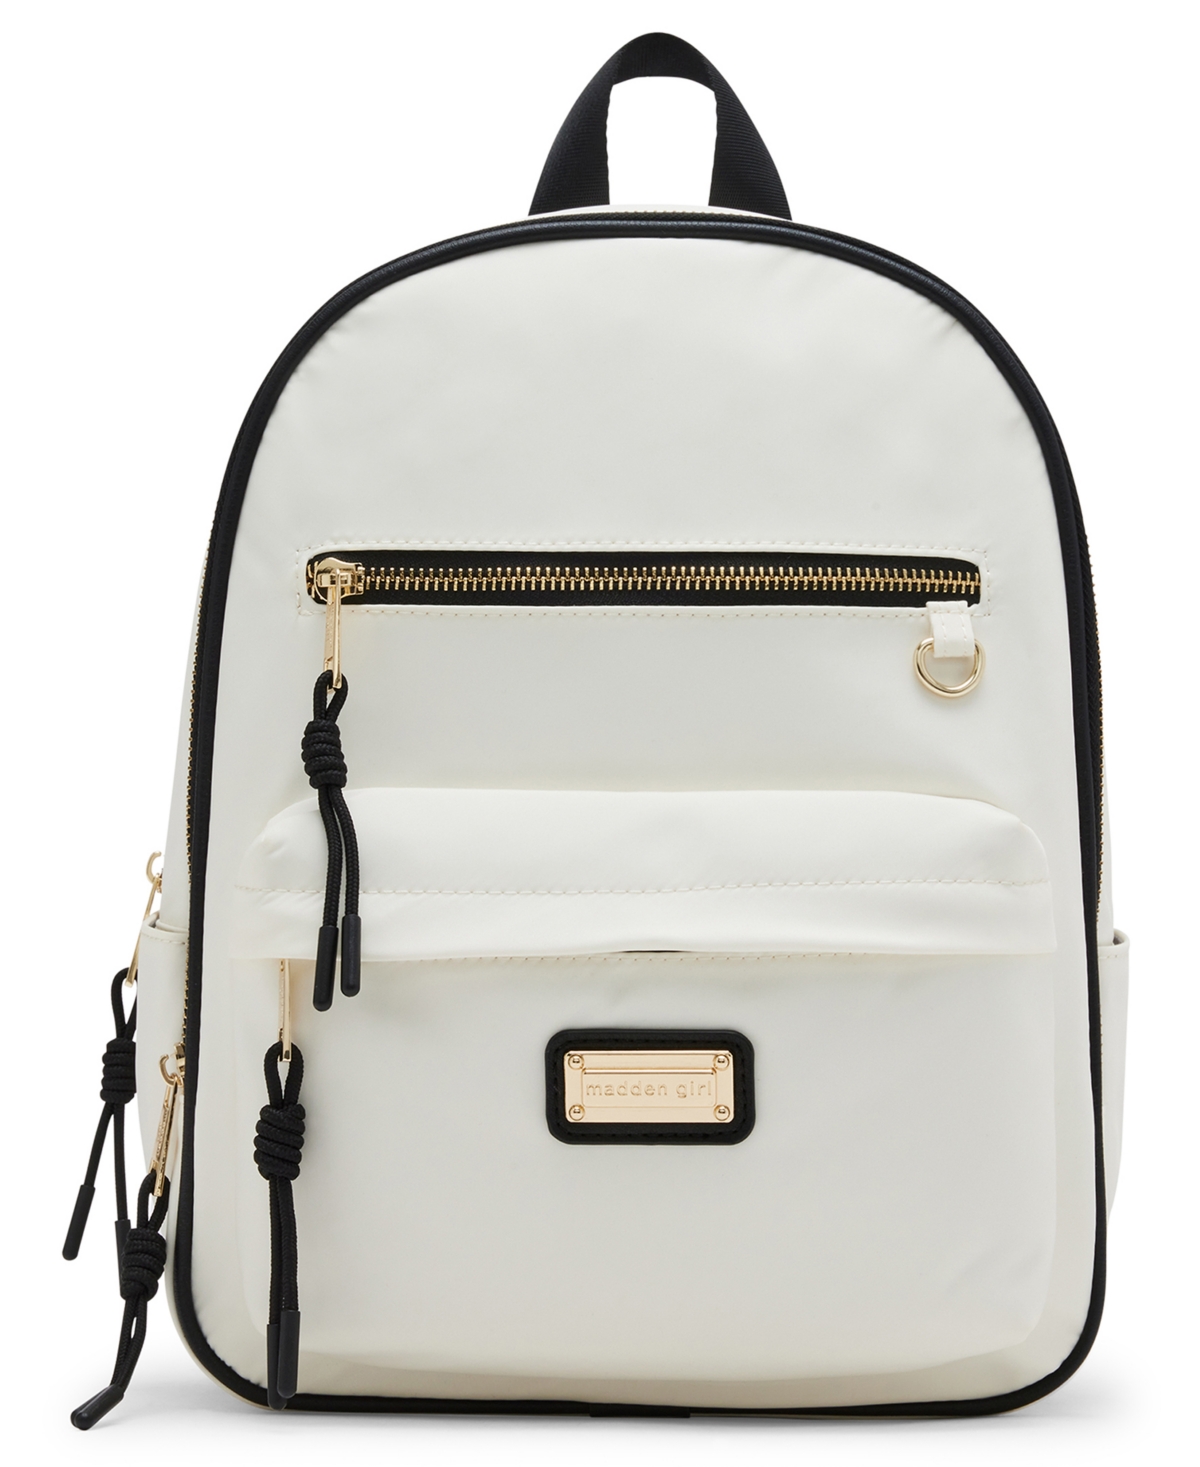 Caitlyn Midsize Backpack - Pastel Floral